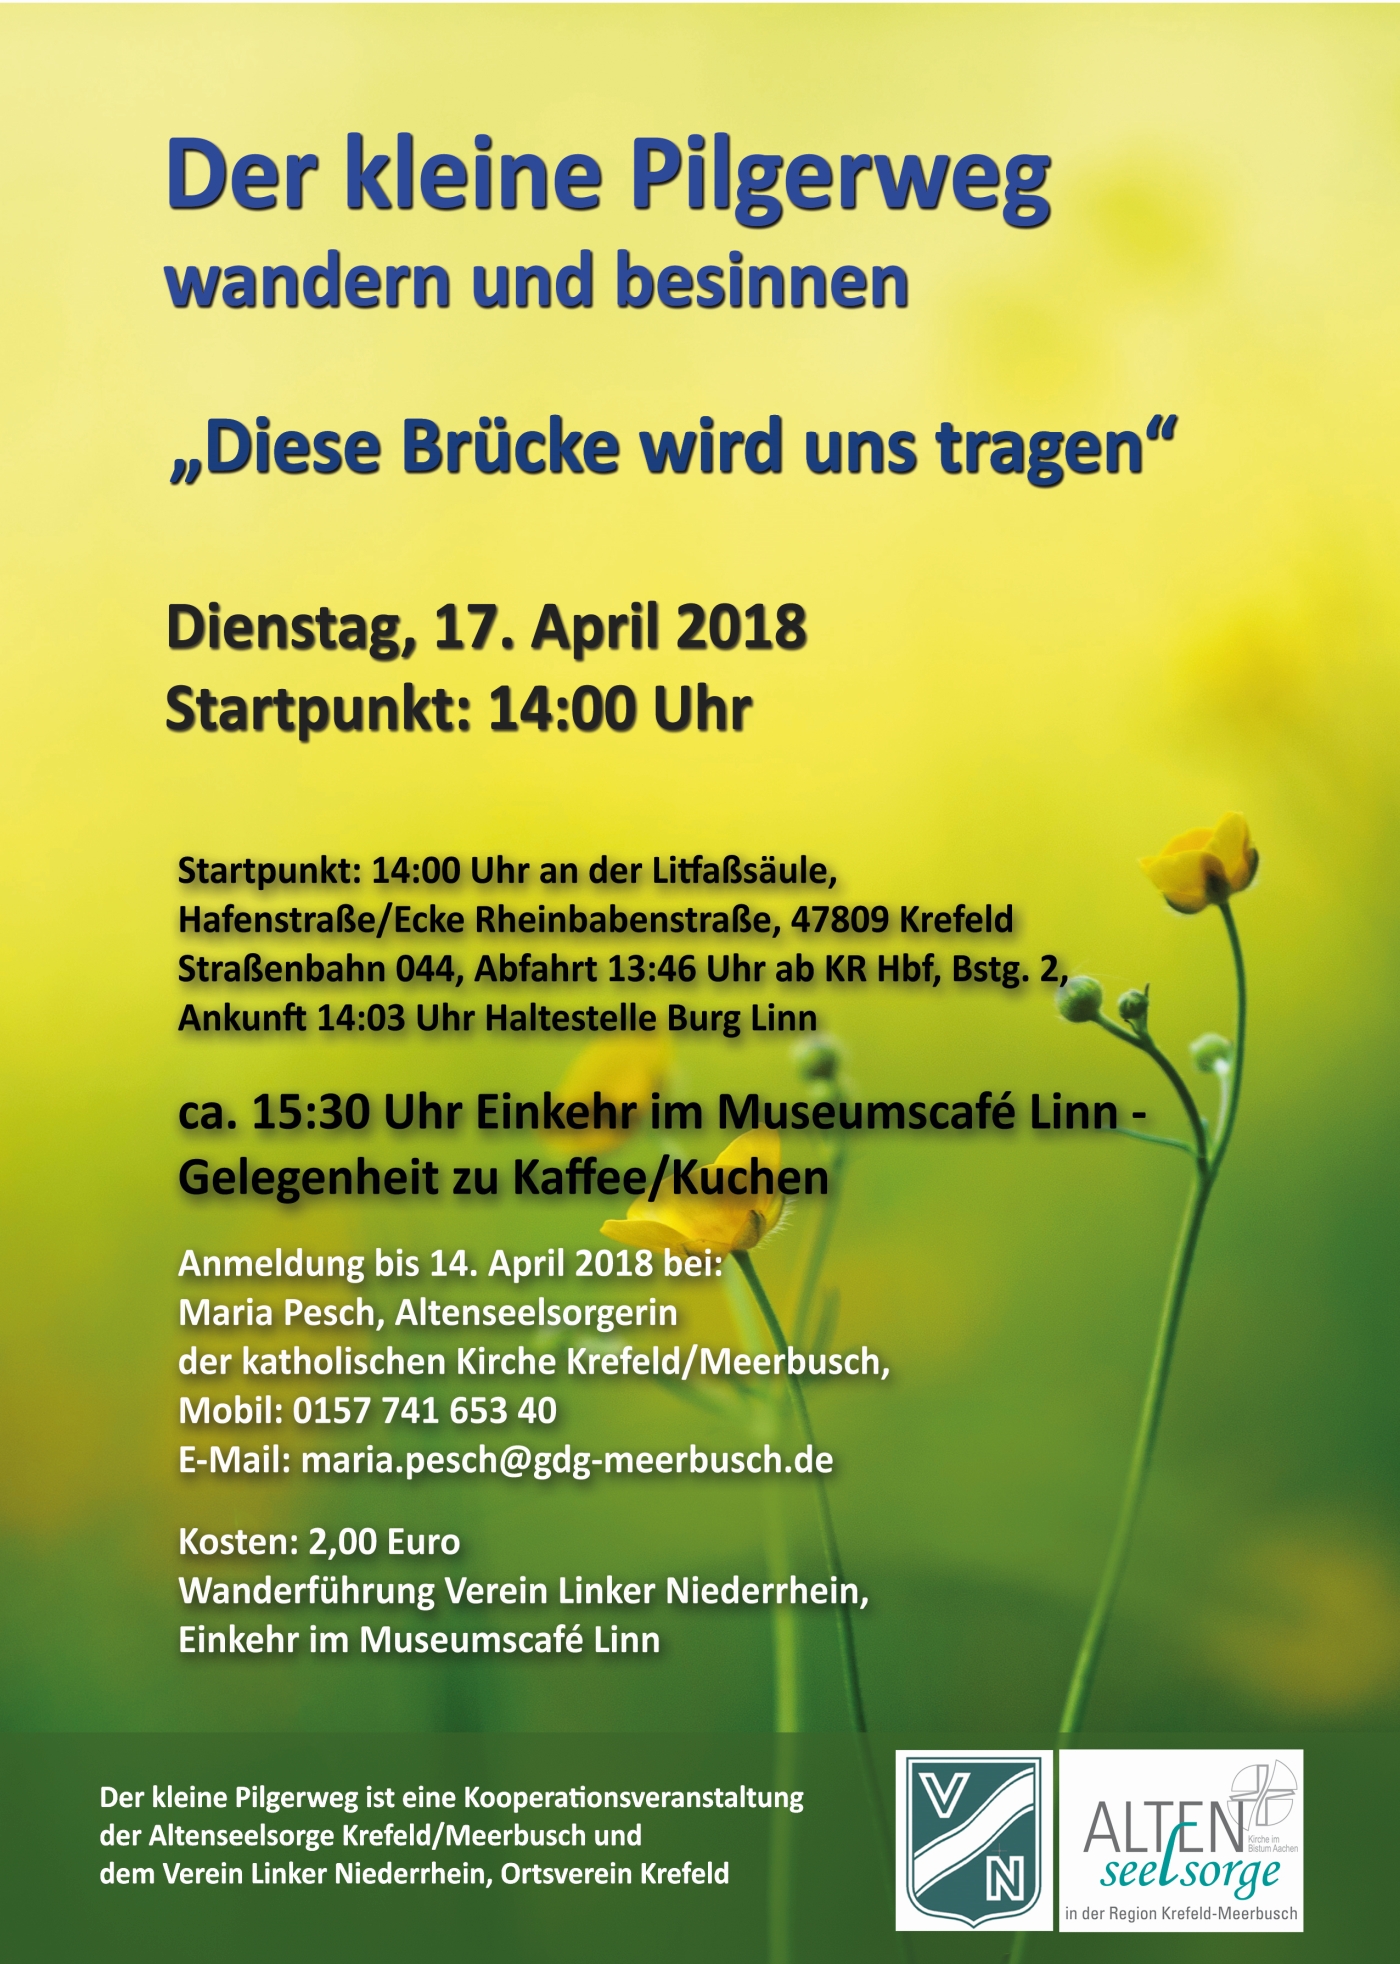 Plakat Pilgerweg April 2018 (c) Altenarbeit